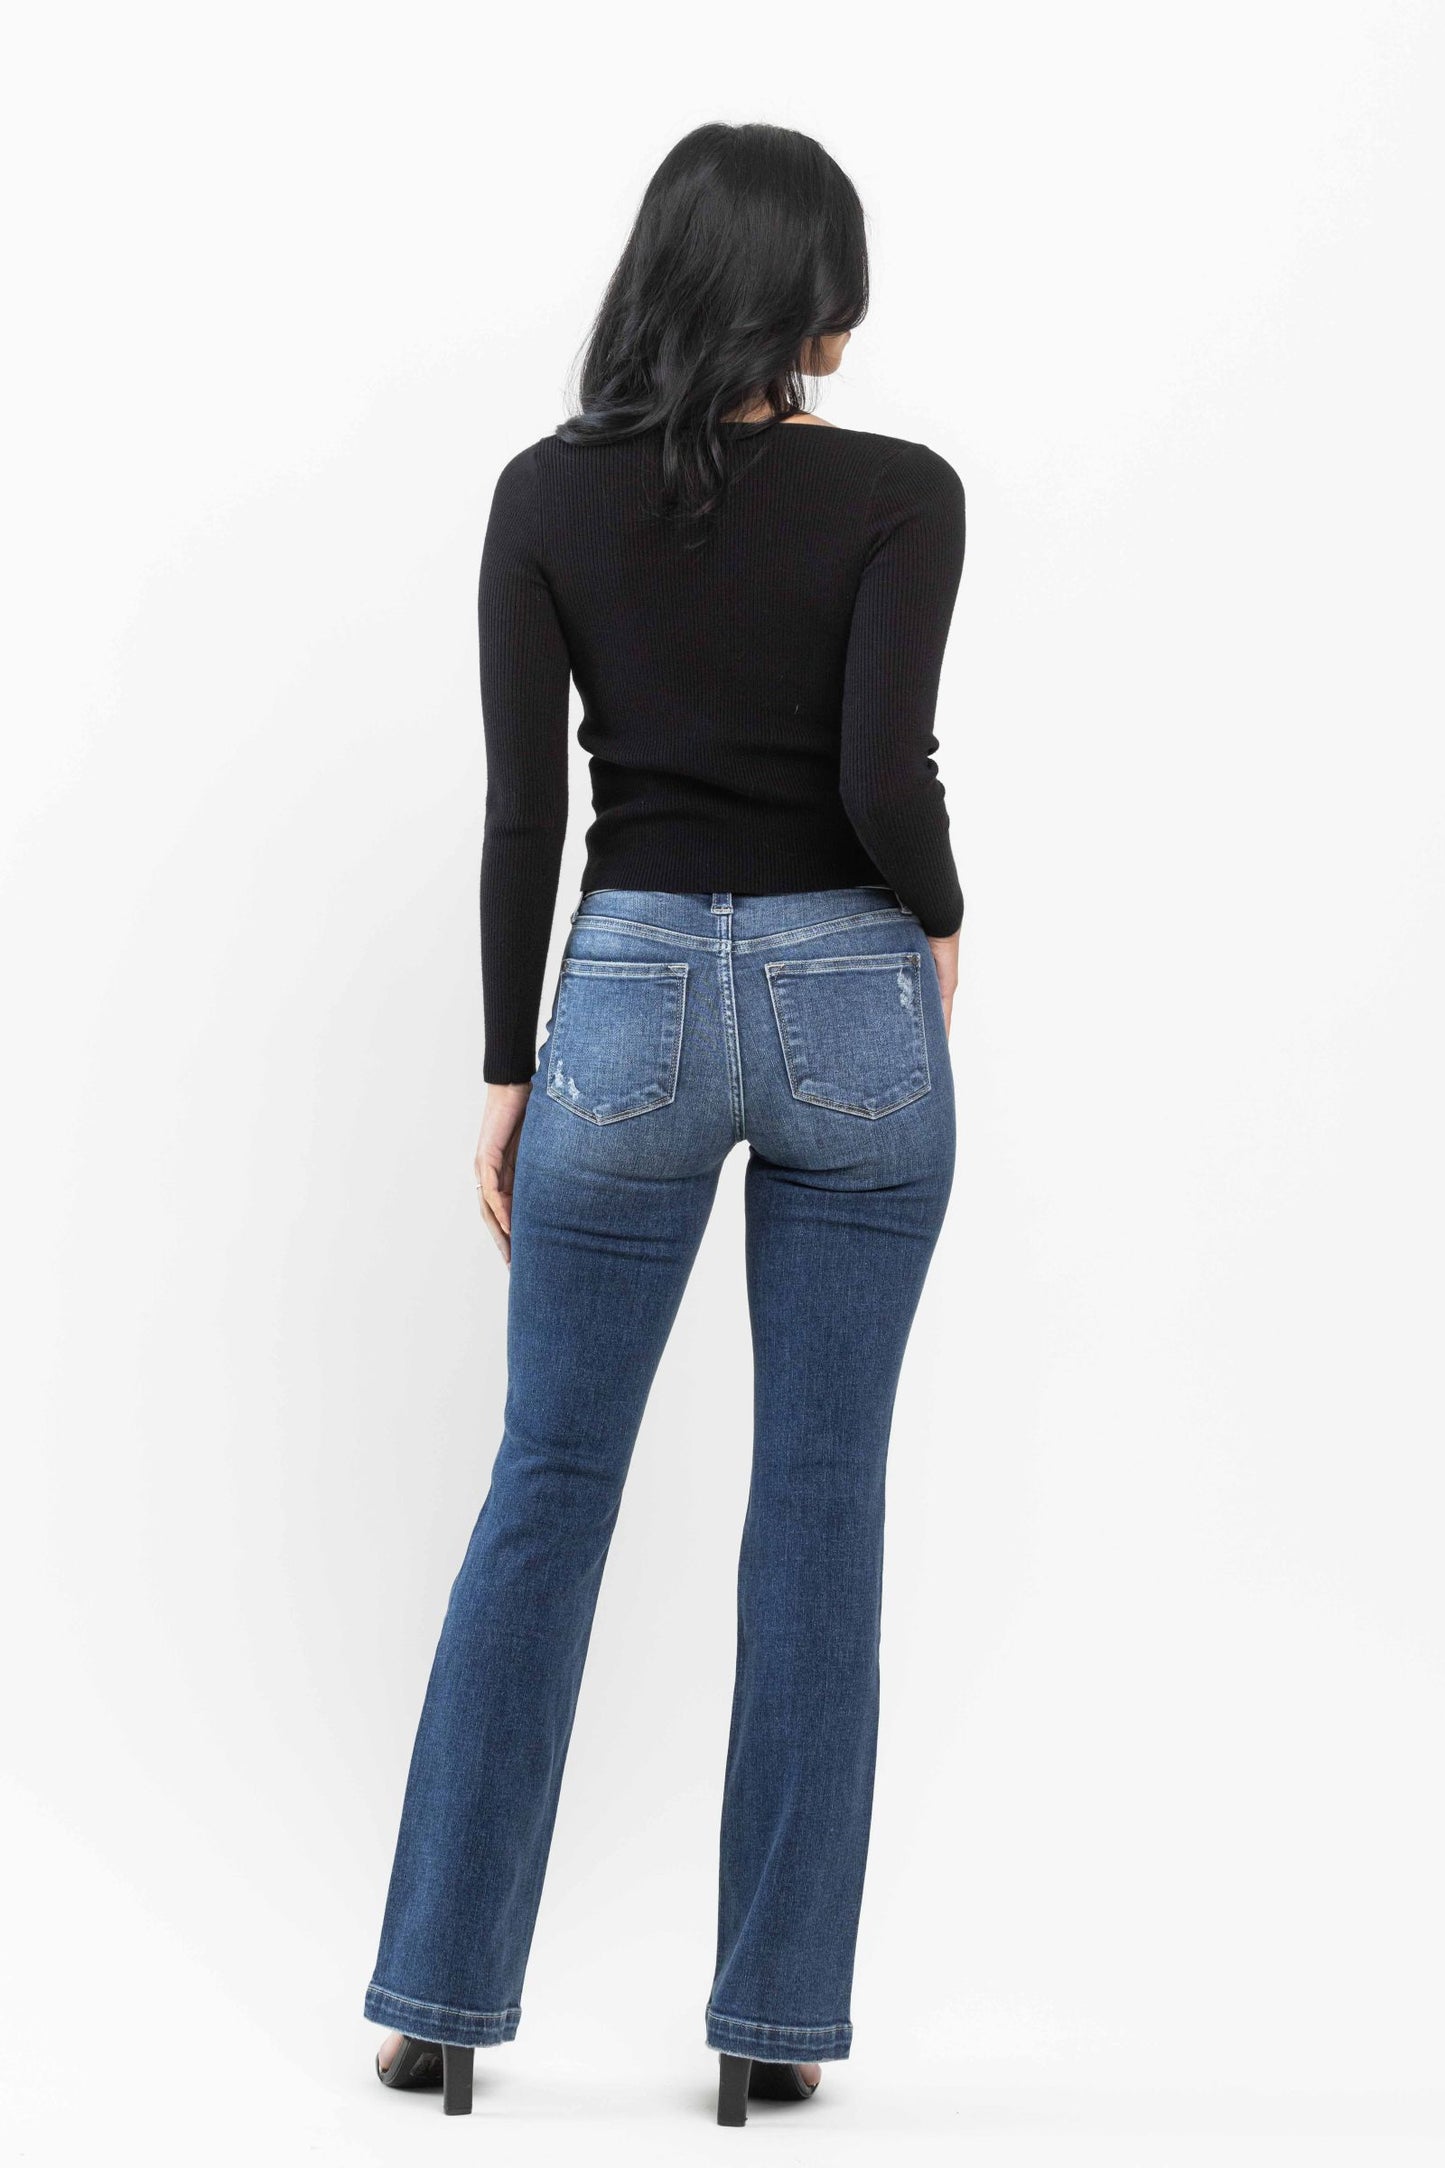 Judy Blue Cameron Mid-Rise Distressed Bootcut Jeans (JB 82541)